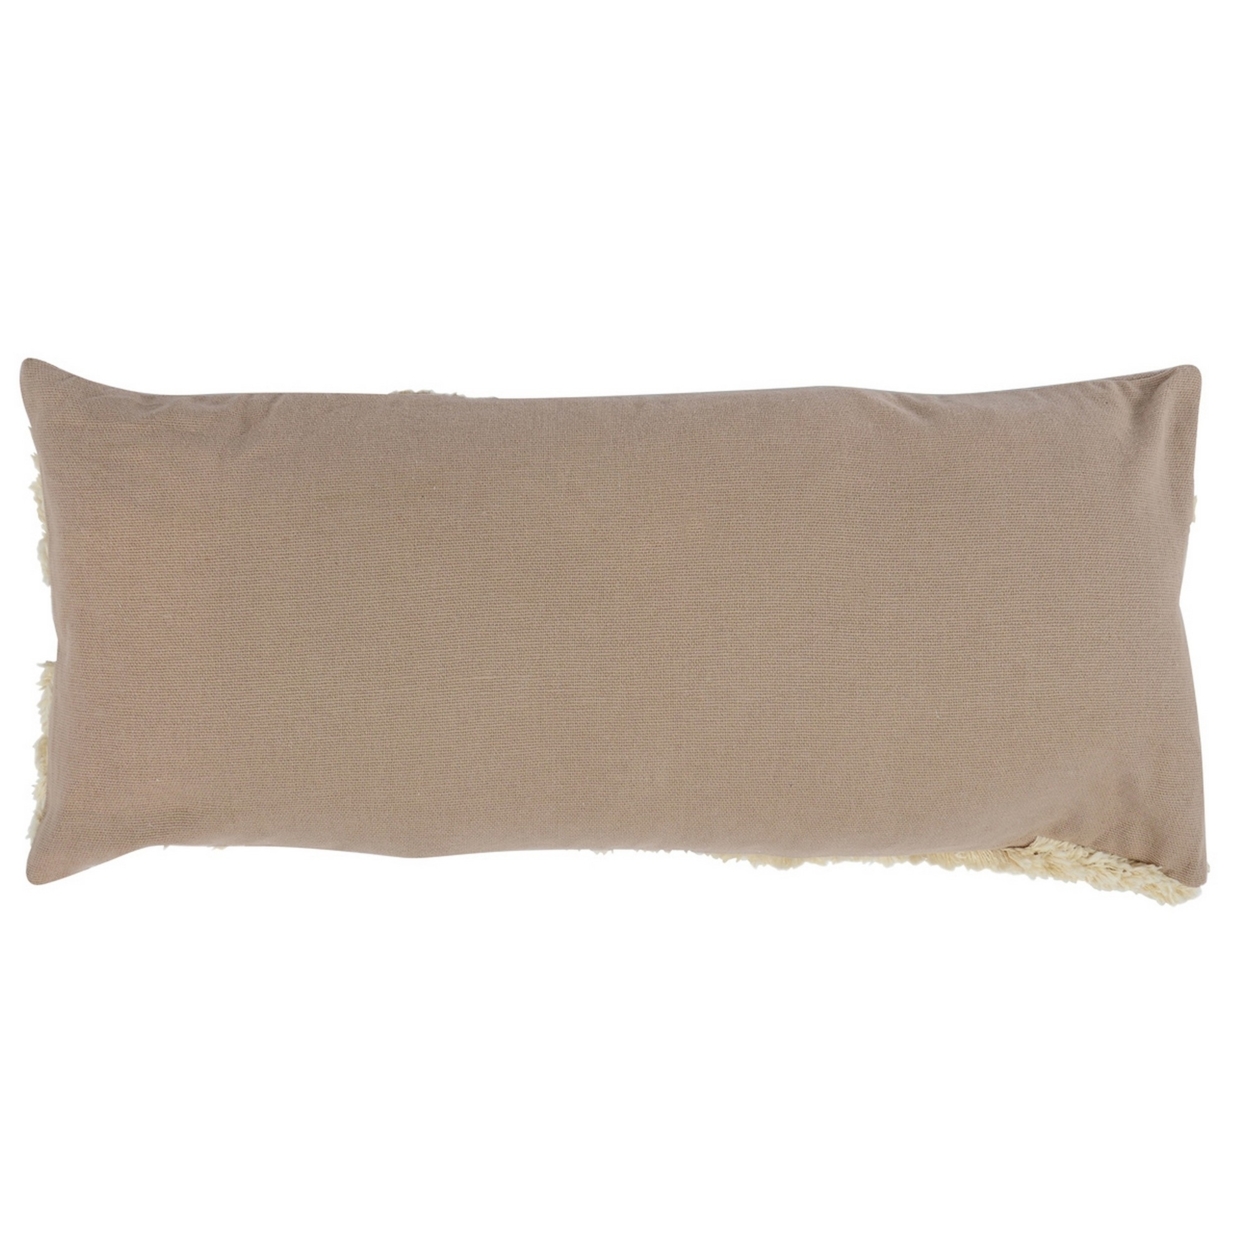 16 X 36 Rectangular Cotton Accent Throw Pillow, Shaggy Textured, Brown, Saltoro Sherpi